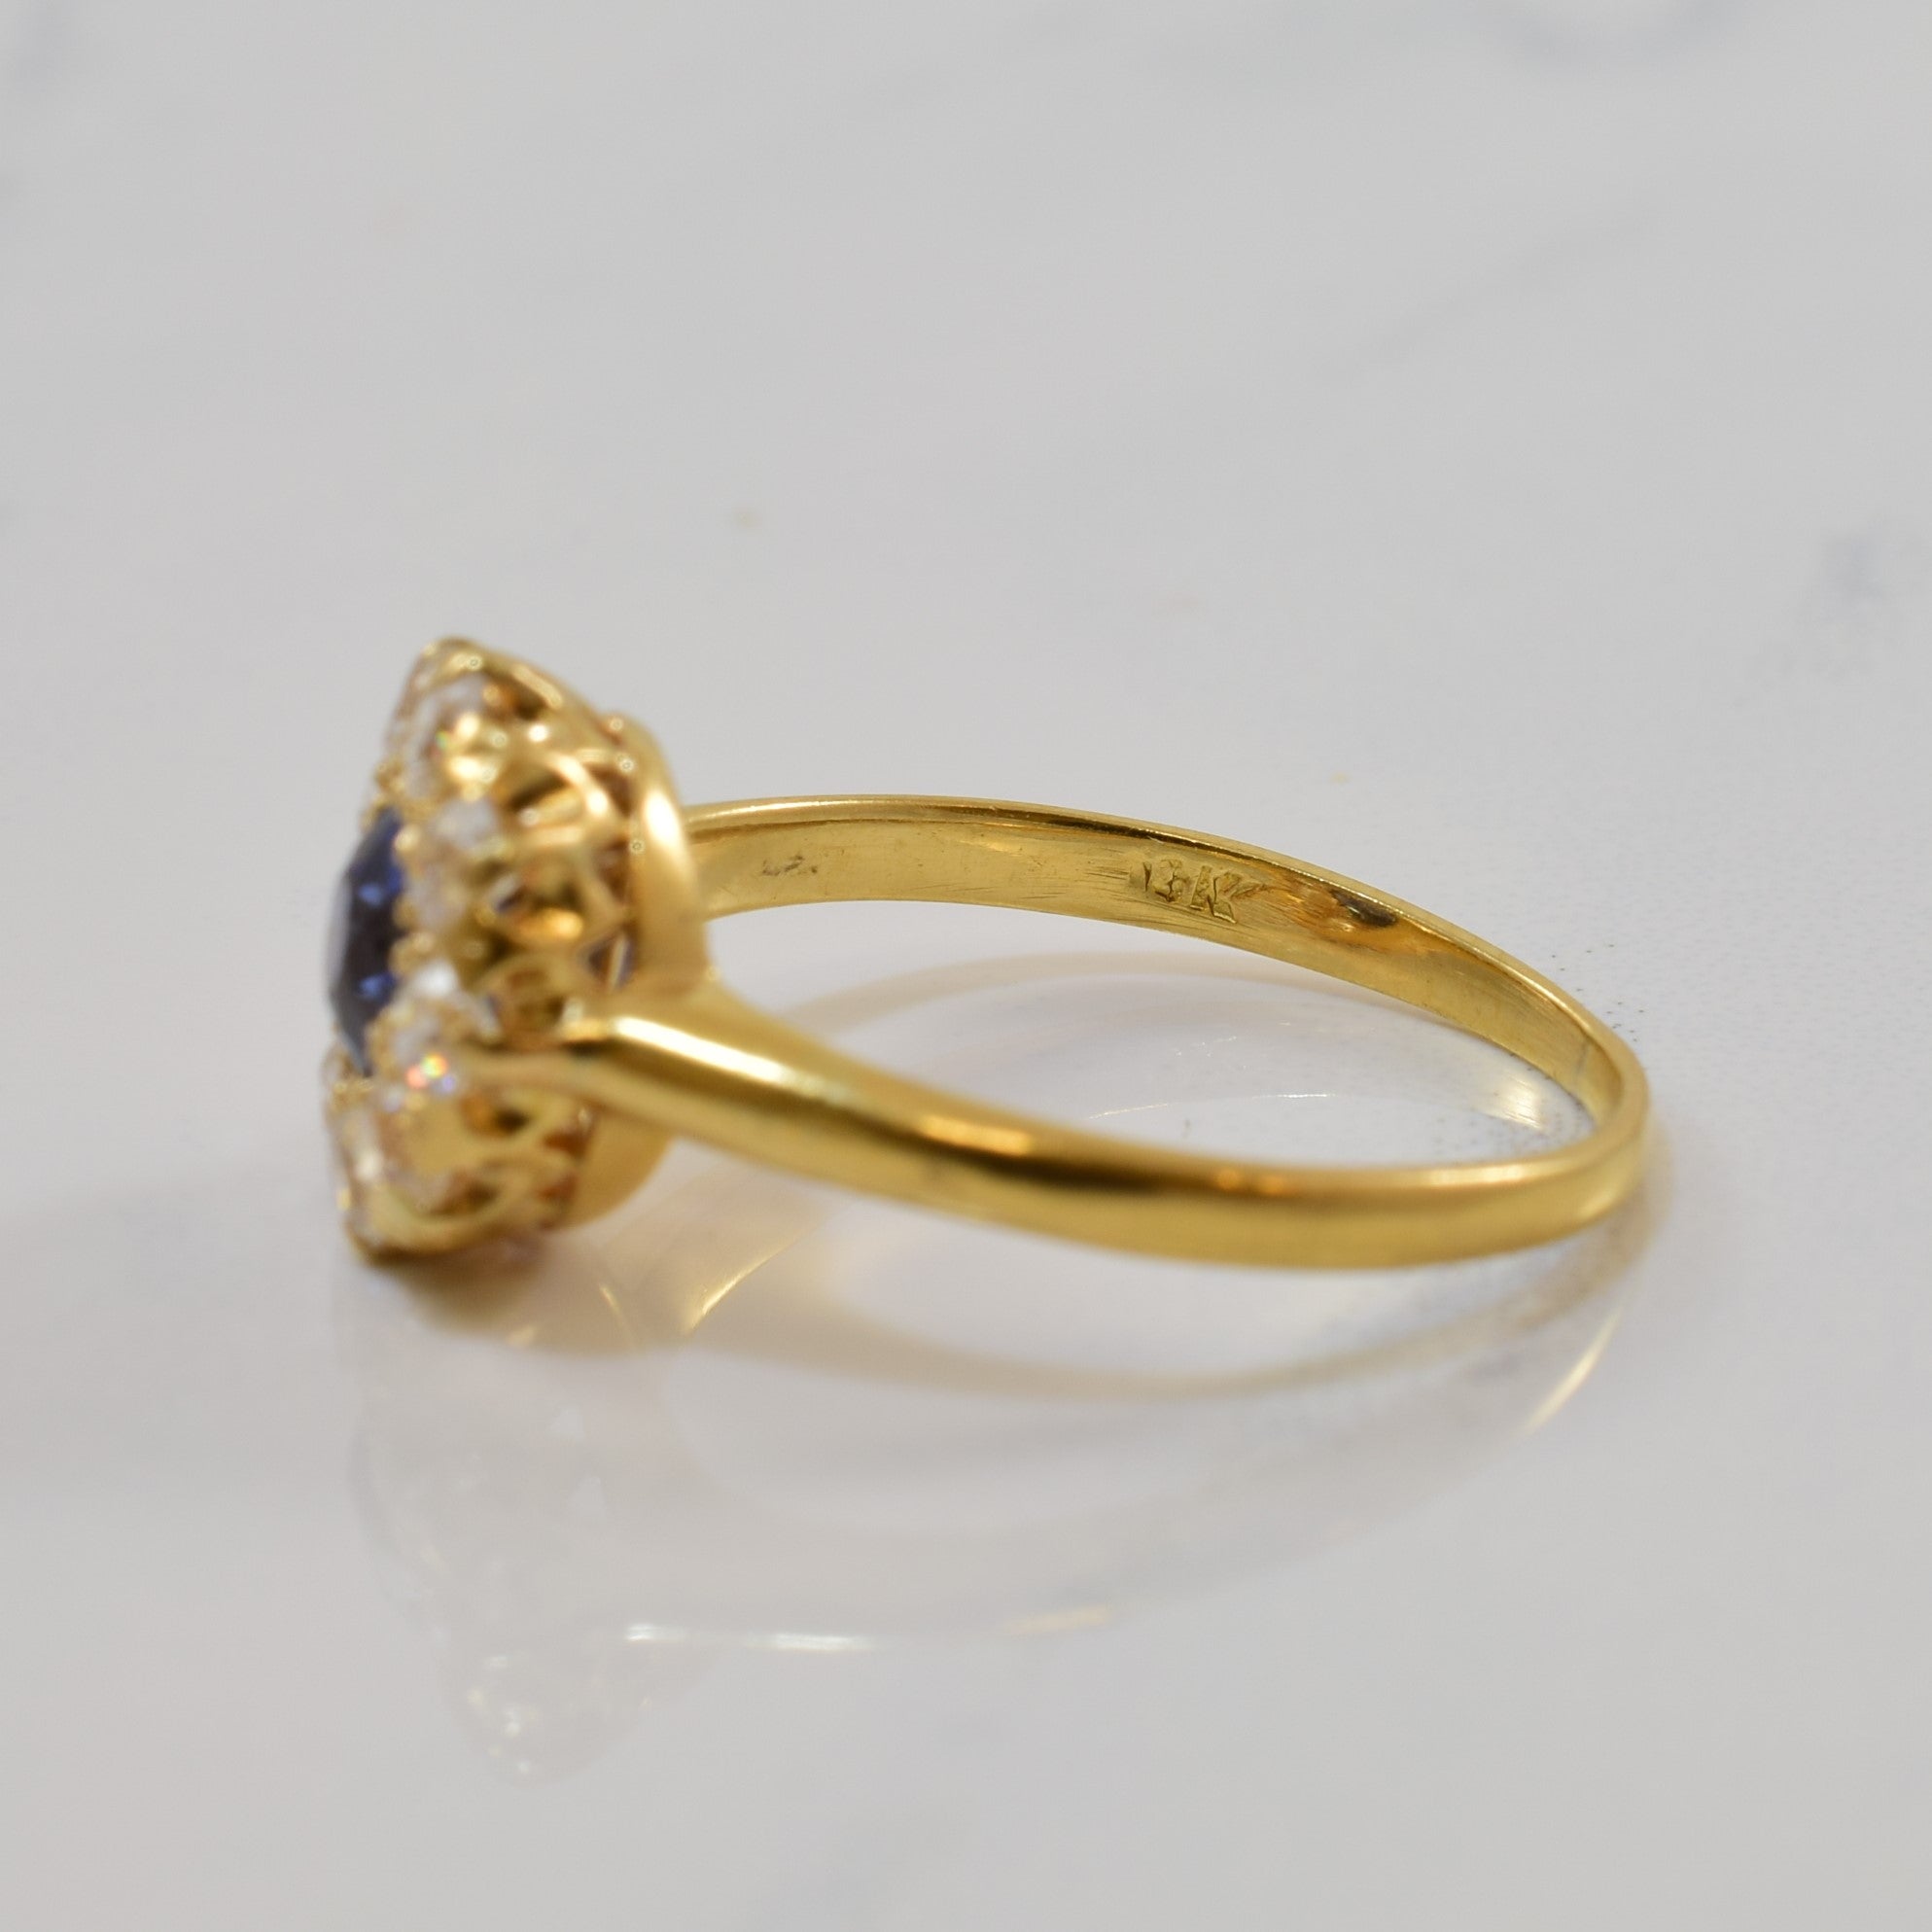 Edwardian Blue Sapphire & Diamond Halo Ring | 0.50ct, 0.40ctw | SZ 5 |